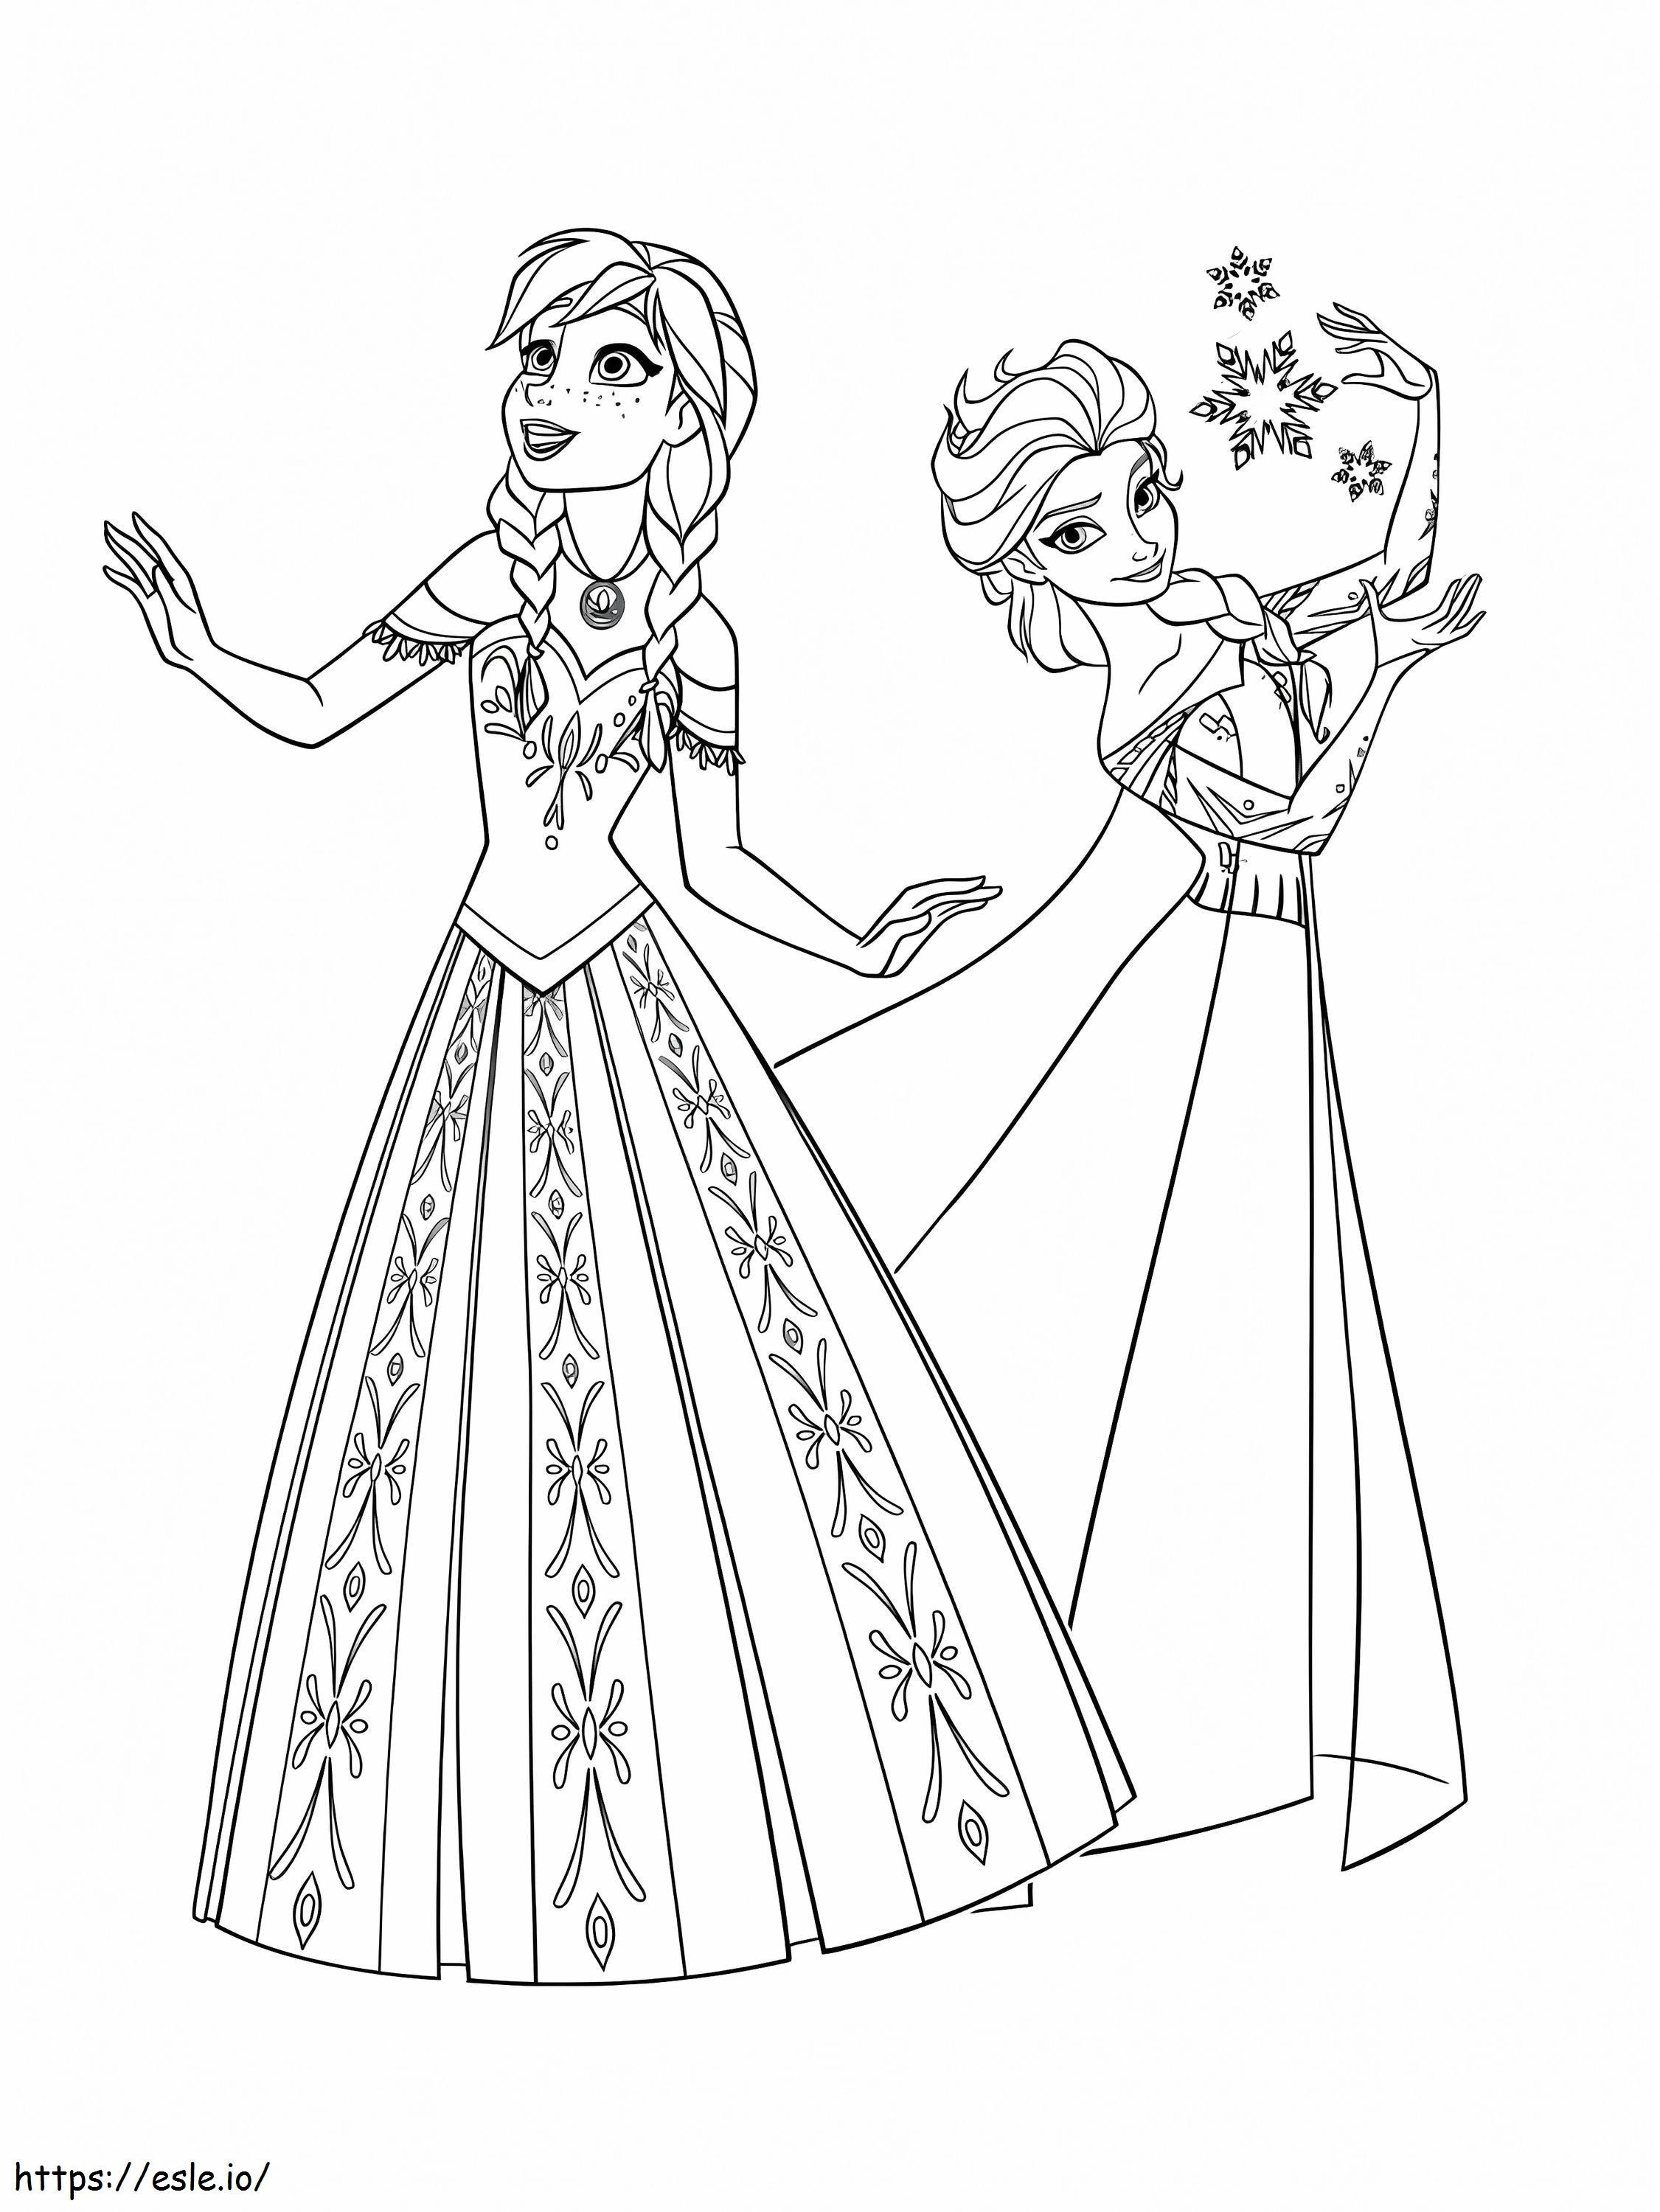 Linda Anna e Elsa para colorir